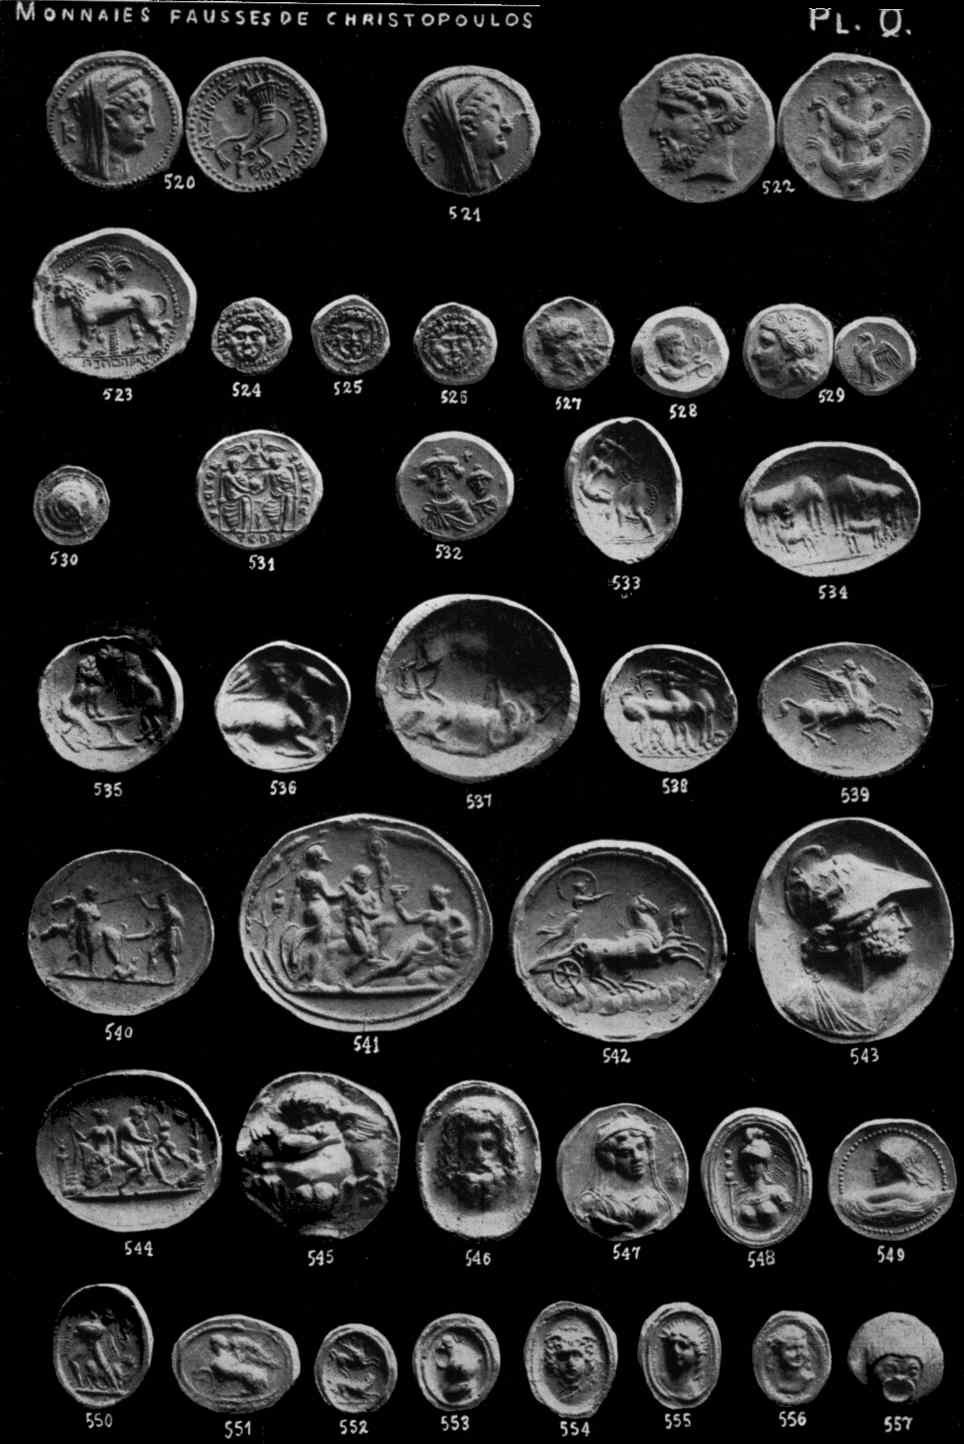 Plate Q of false coins